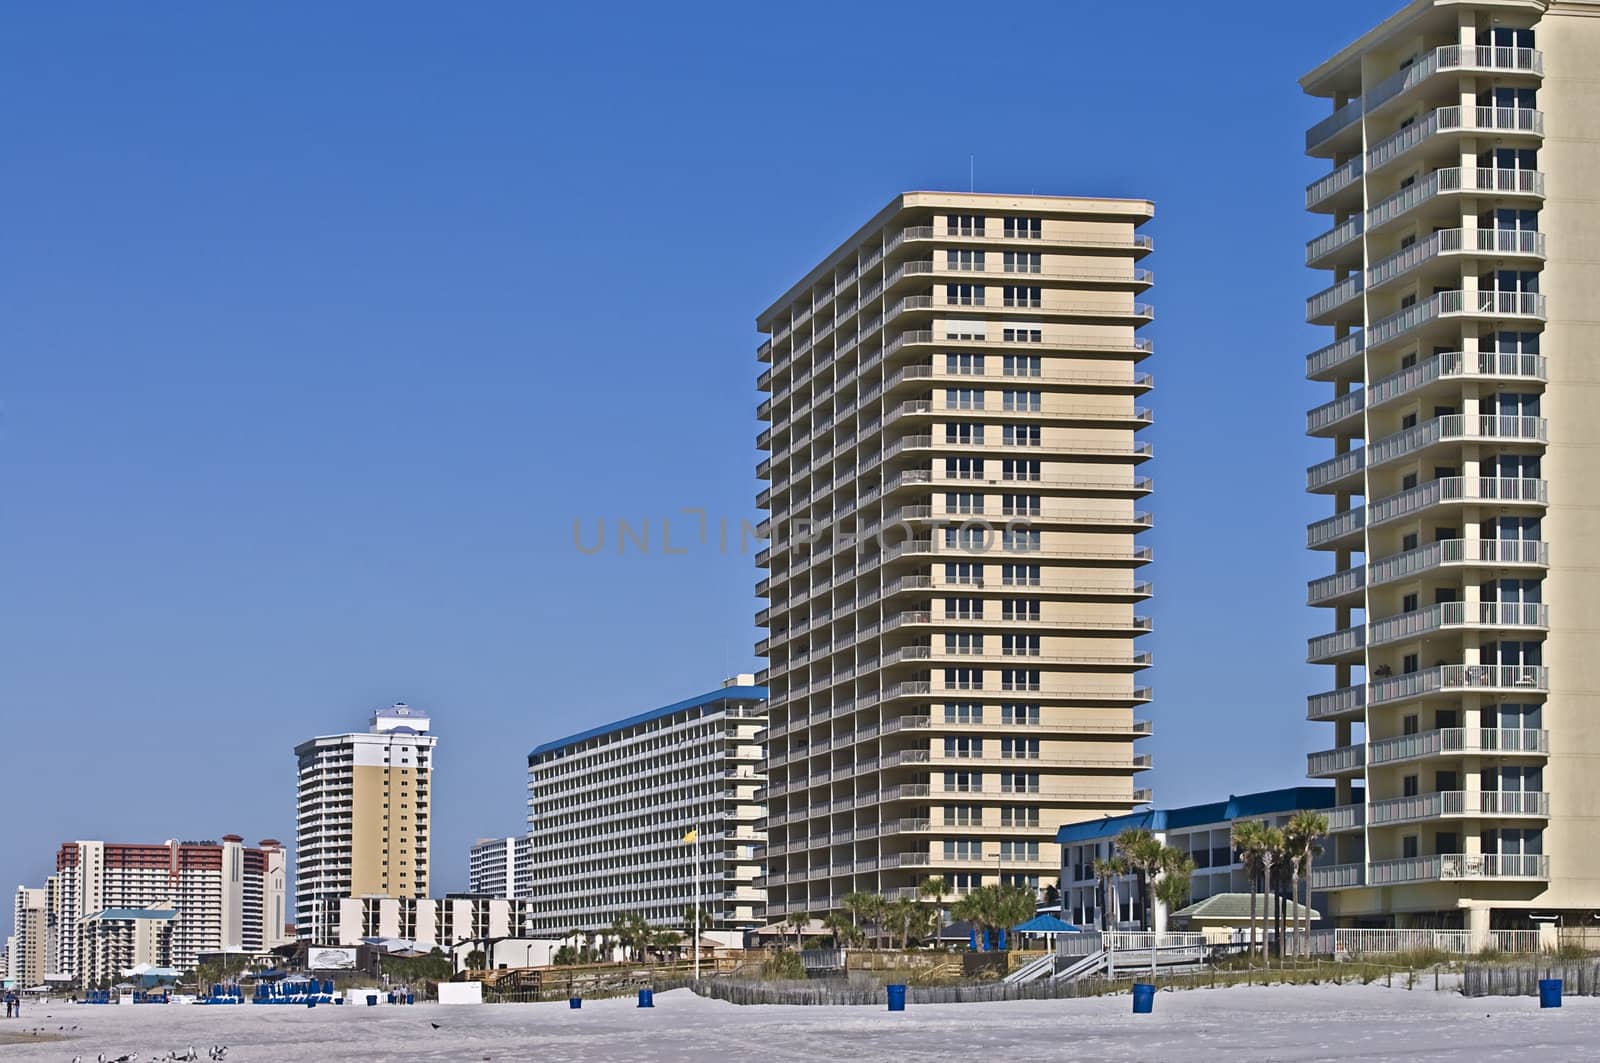 Cobdominiums in a row along the beach in Panama City Beach, Florida.